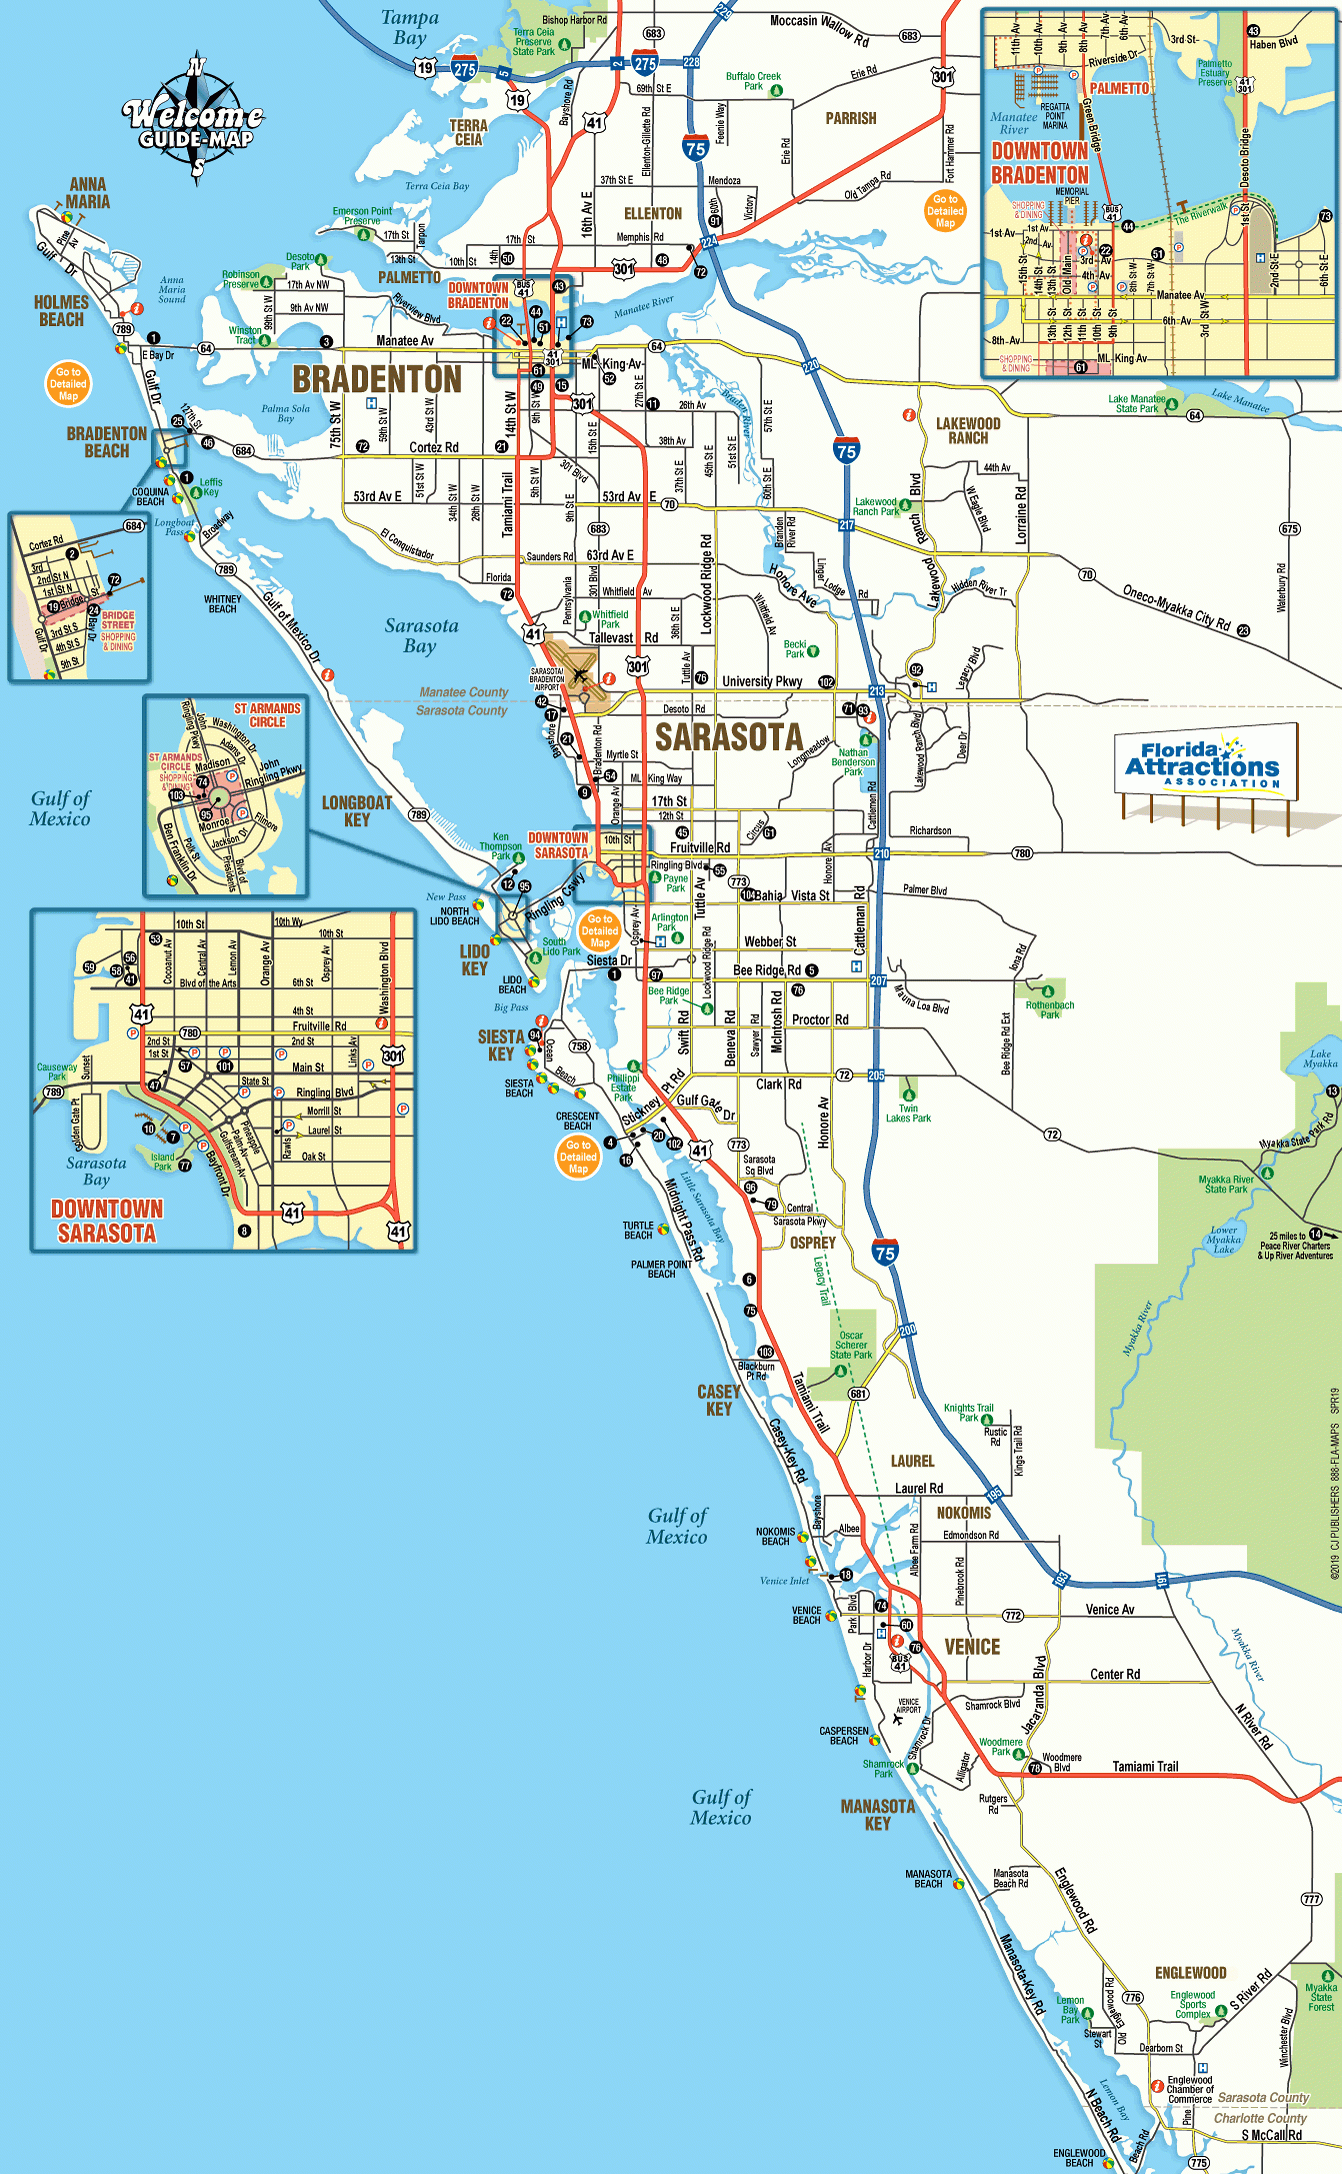 Map Of Sarasota And Bradenton Florida - Welcome Guide-Map To - Lakewood Ranch Map Florida